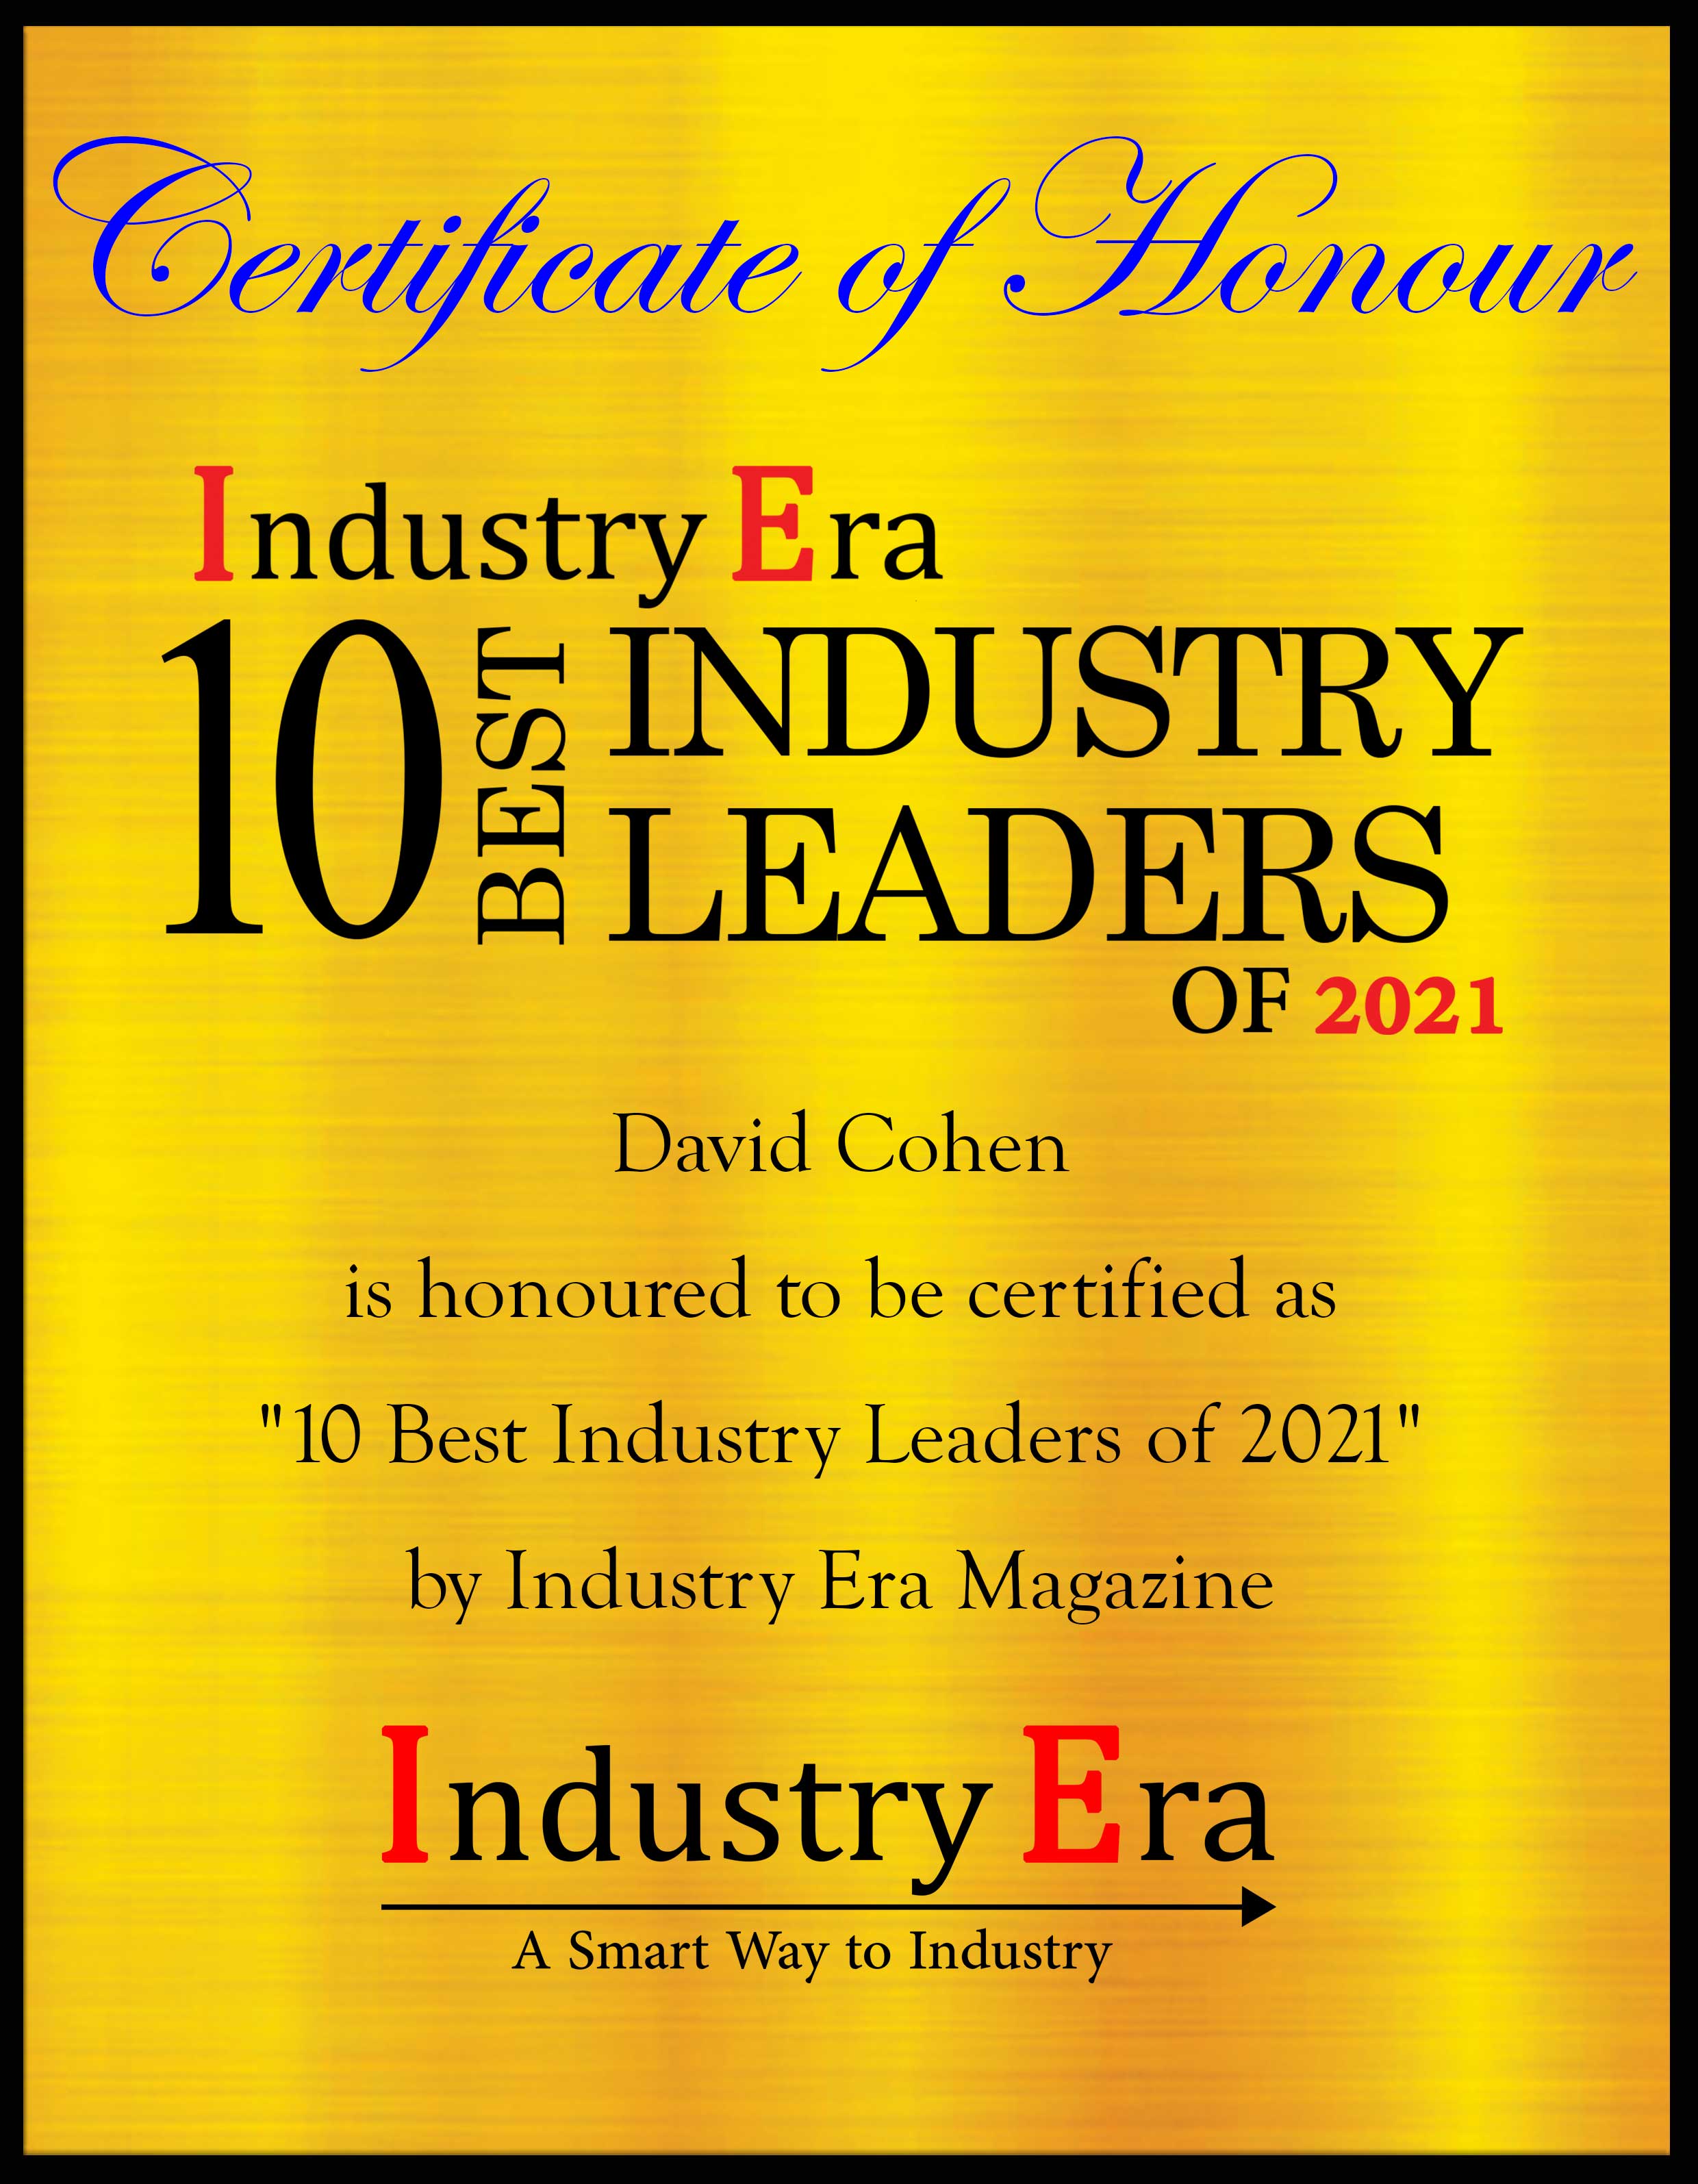 David Cohen, CEO of Grid Worldwide Certificate